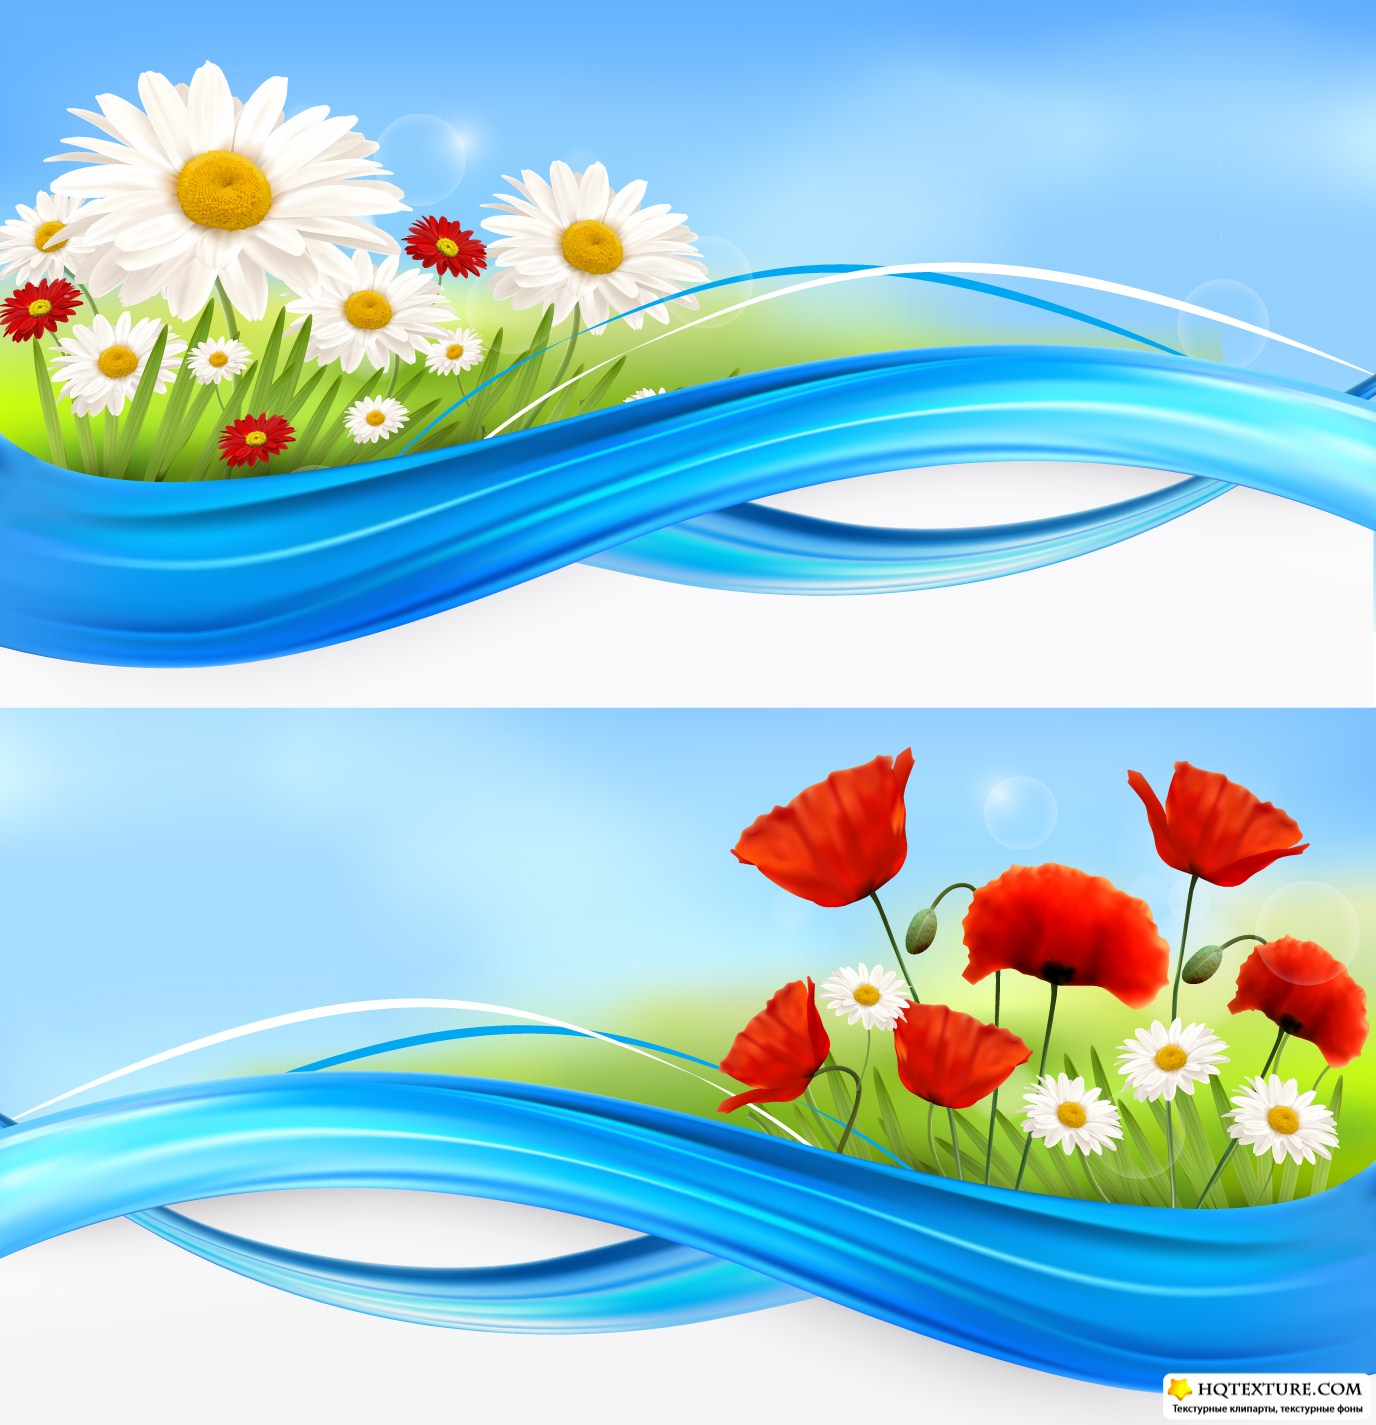 Download Summer Floral Banners Vector » Векторные клипарты ...